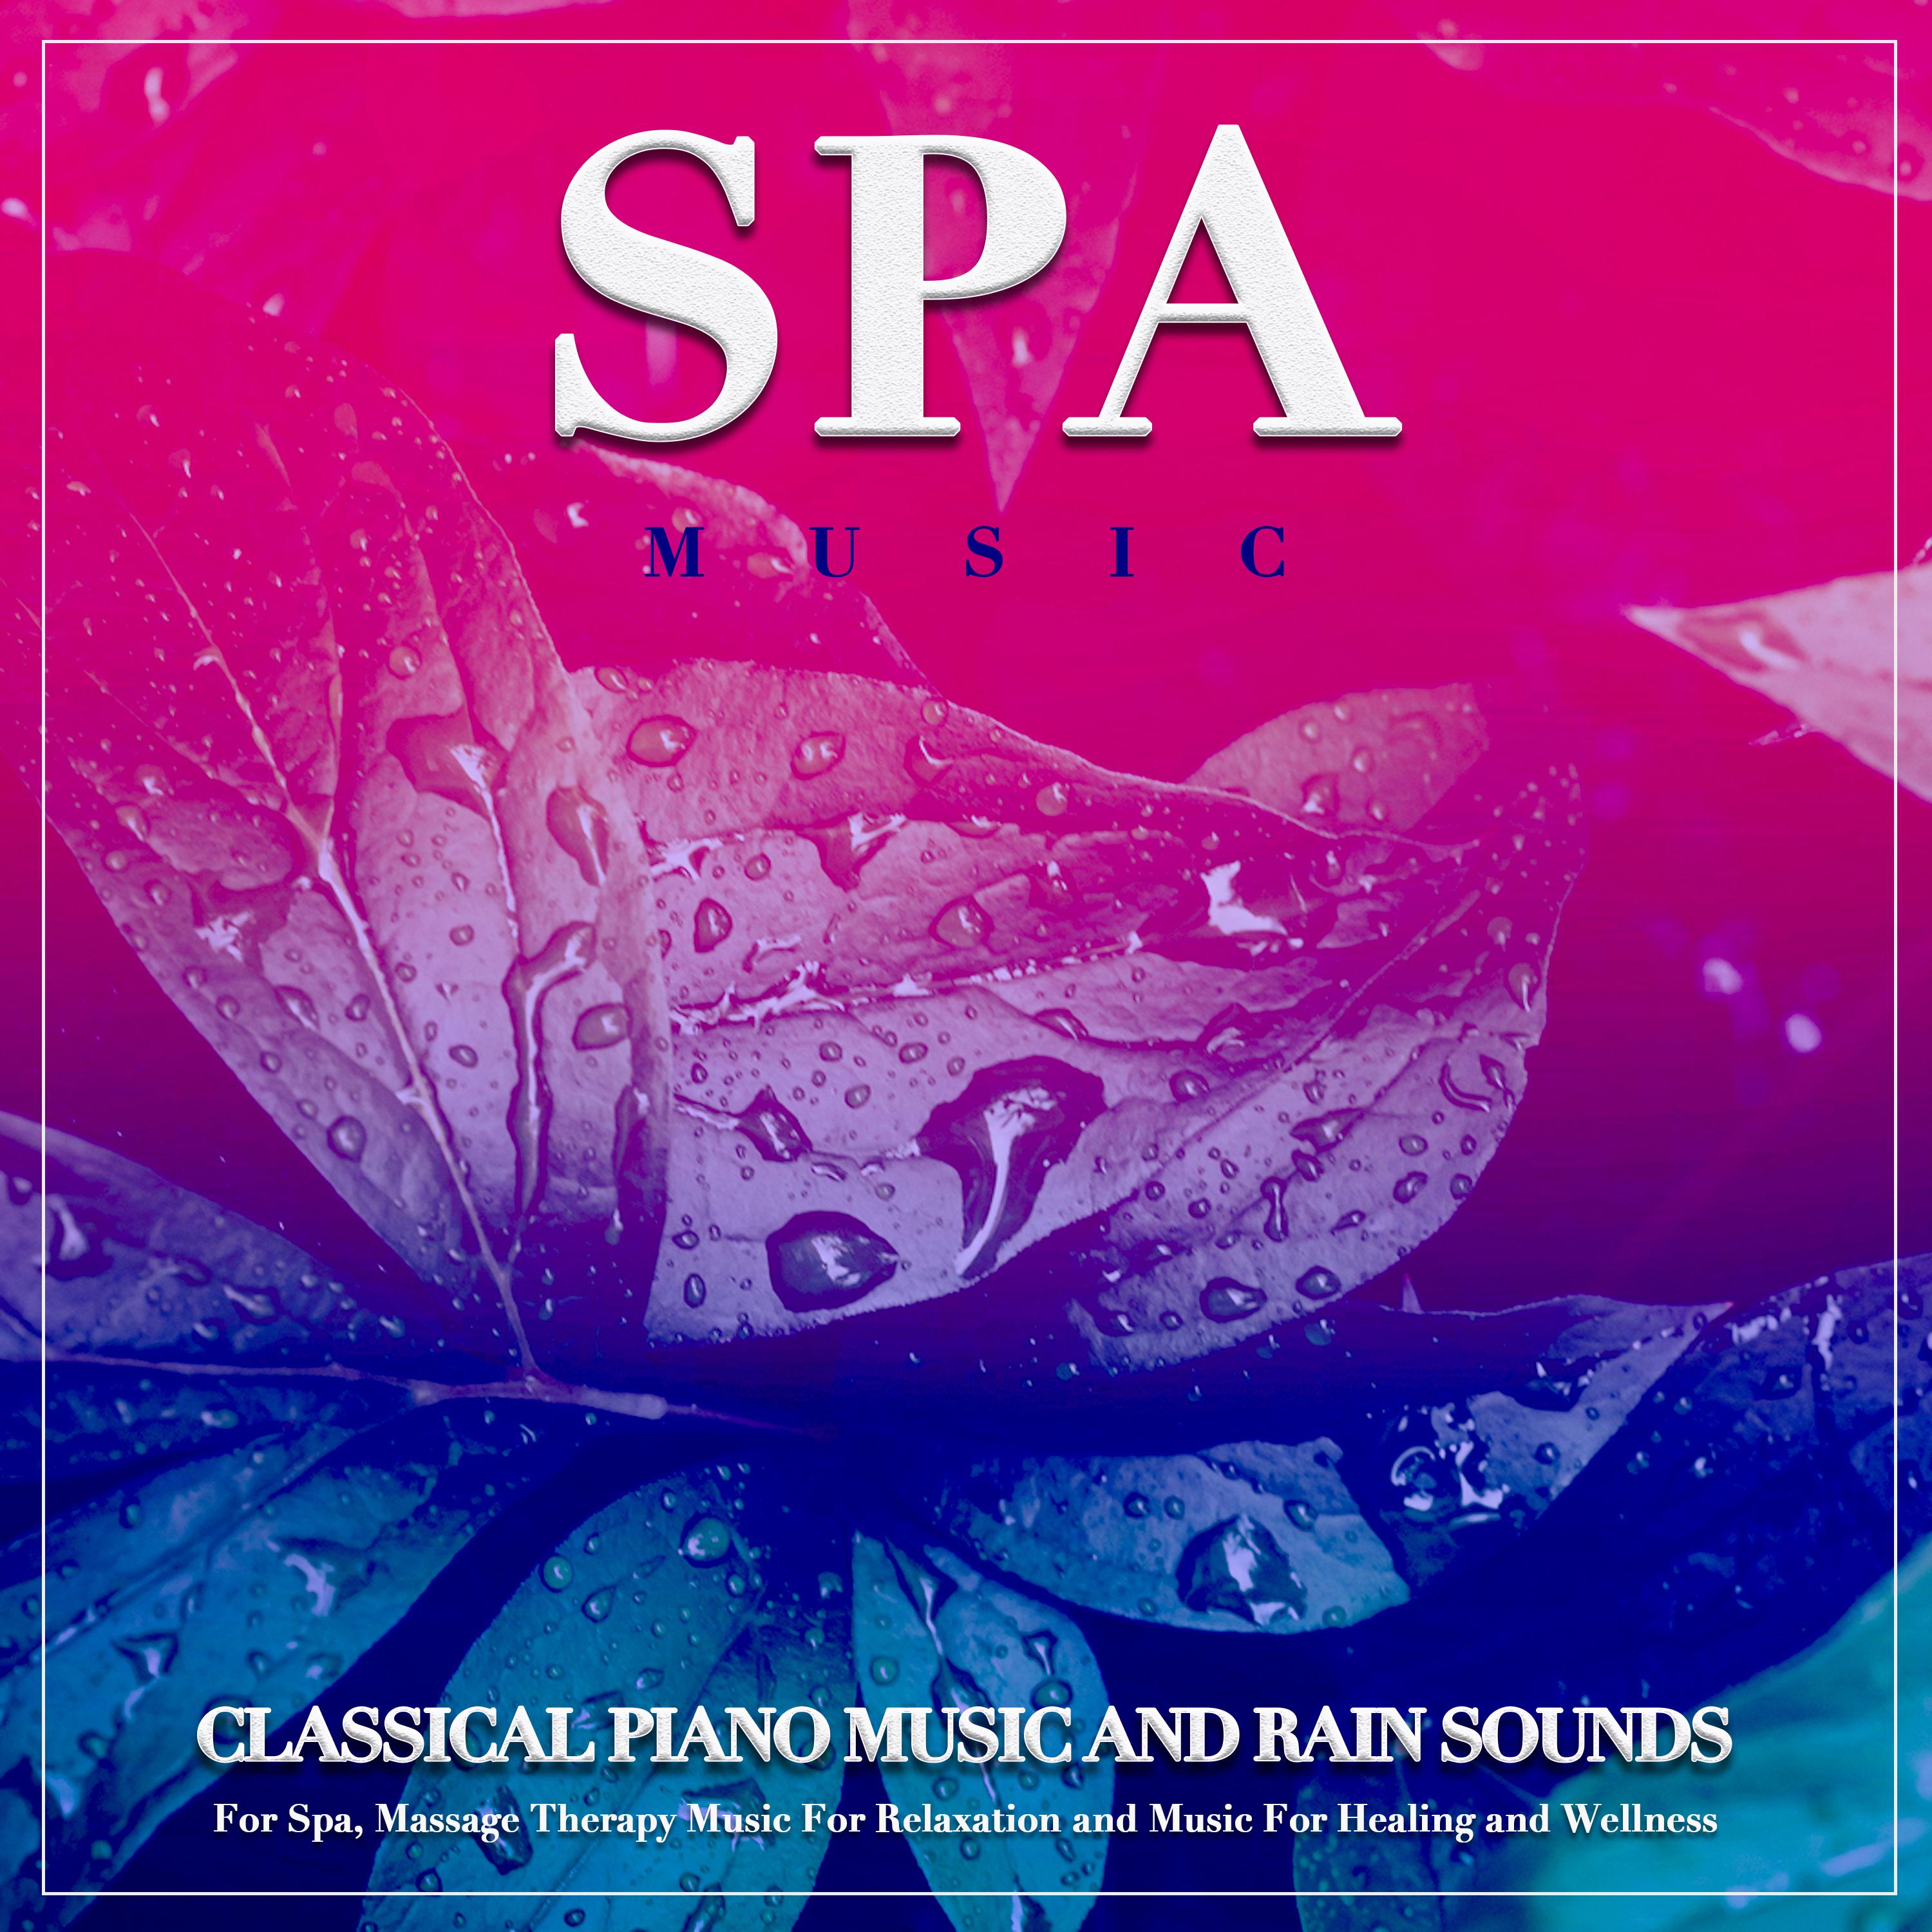 La Fille Aux Cheveux - Debussy - Classical Piano and Rain Sounds - Spa Music